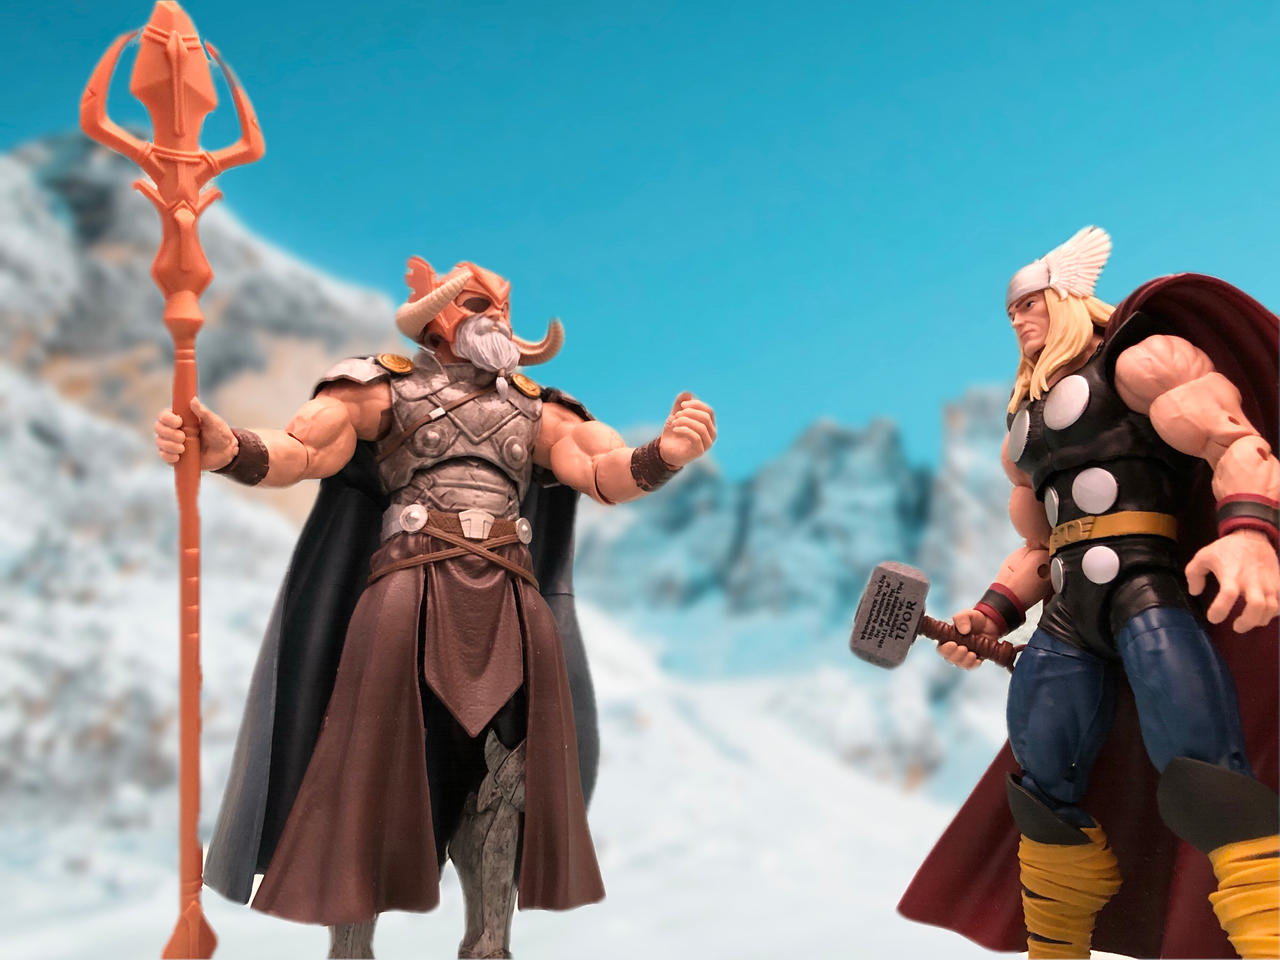 Thor : Odin Valhalla Rising by AnubisDHL on DeviantArt